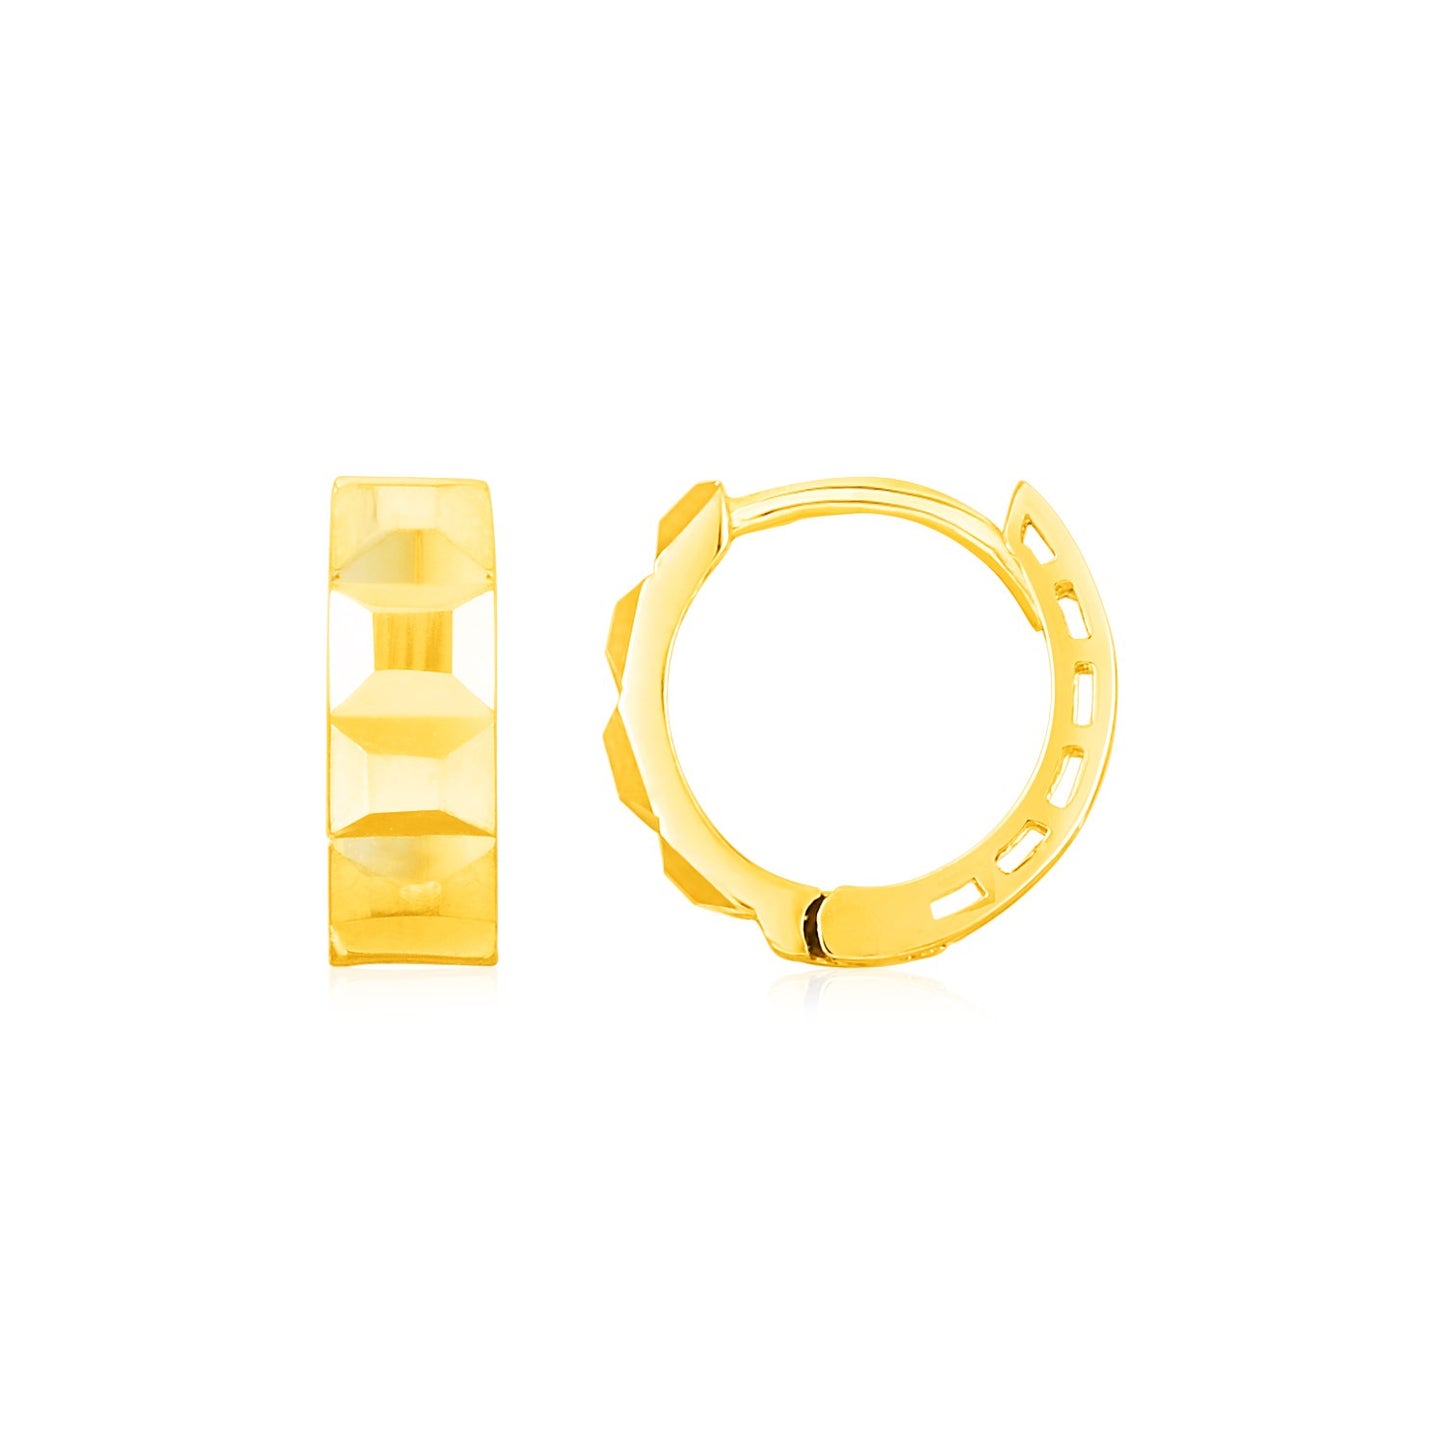 14K Yellow Gold J Hoop Earrings